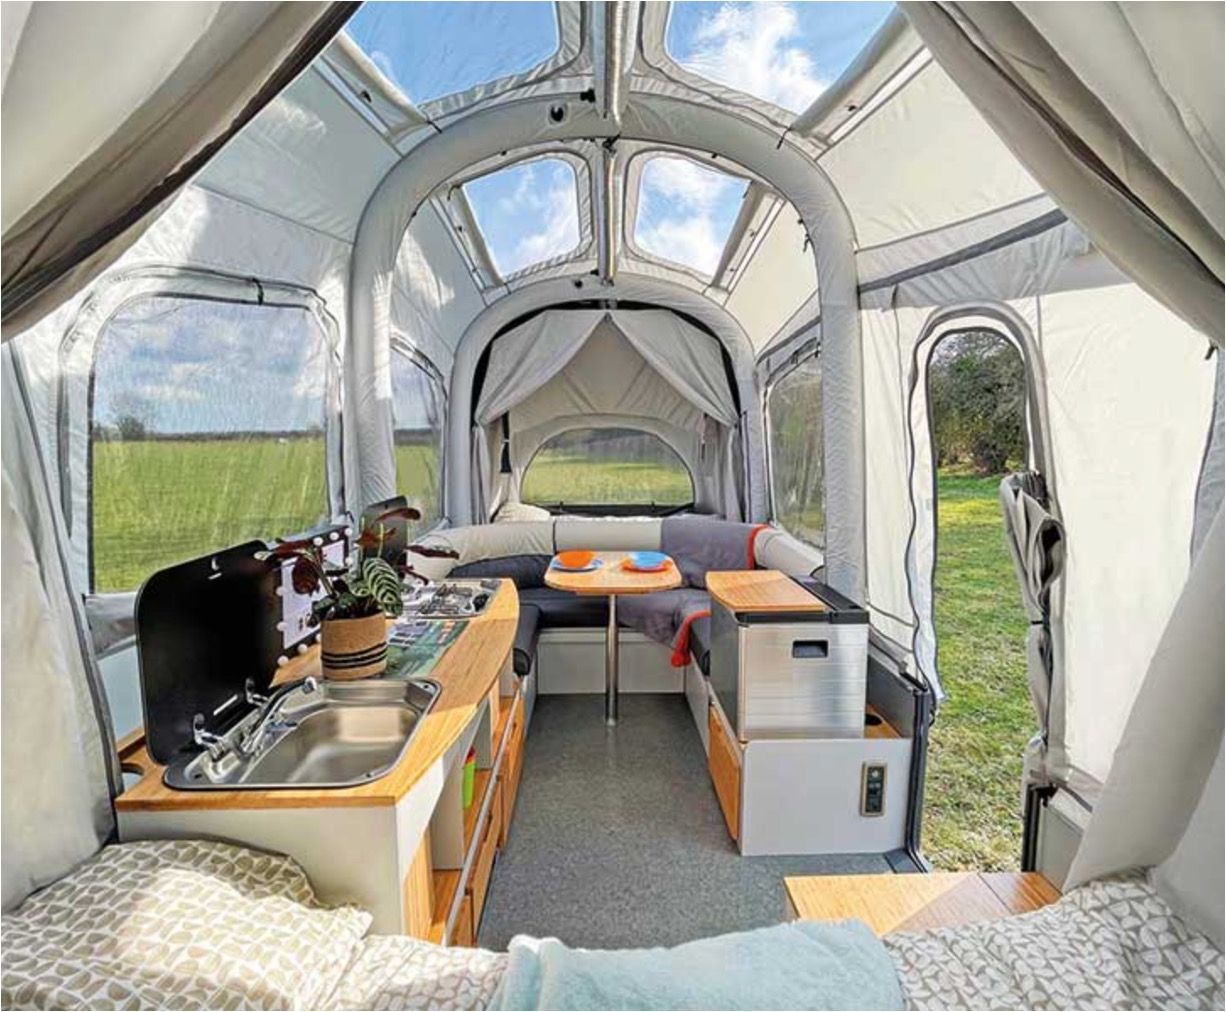 Inside the All-Road Opus folding camper